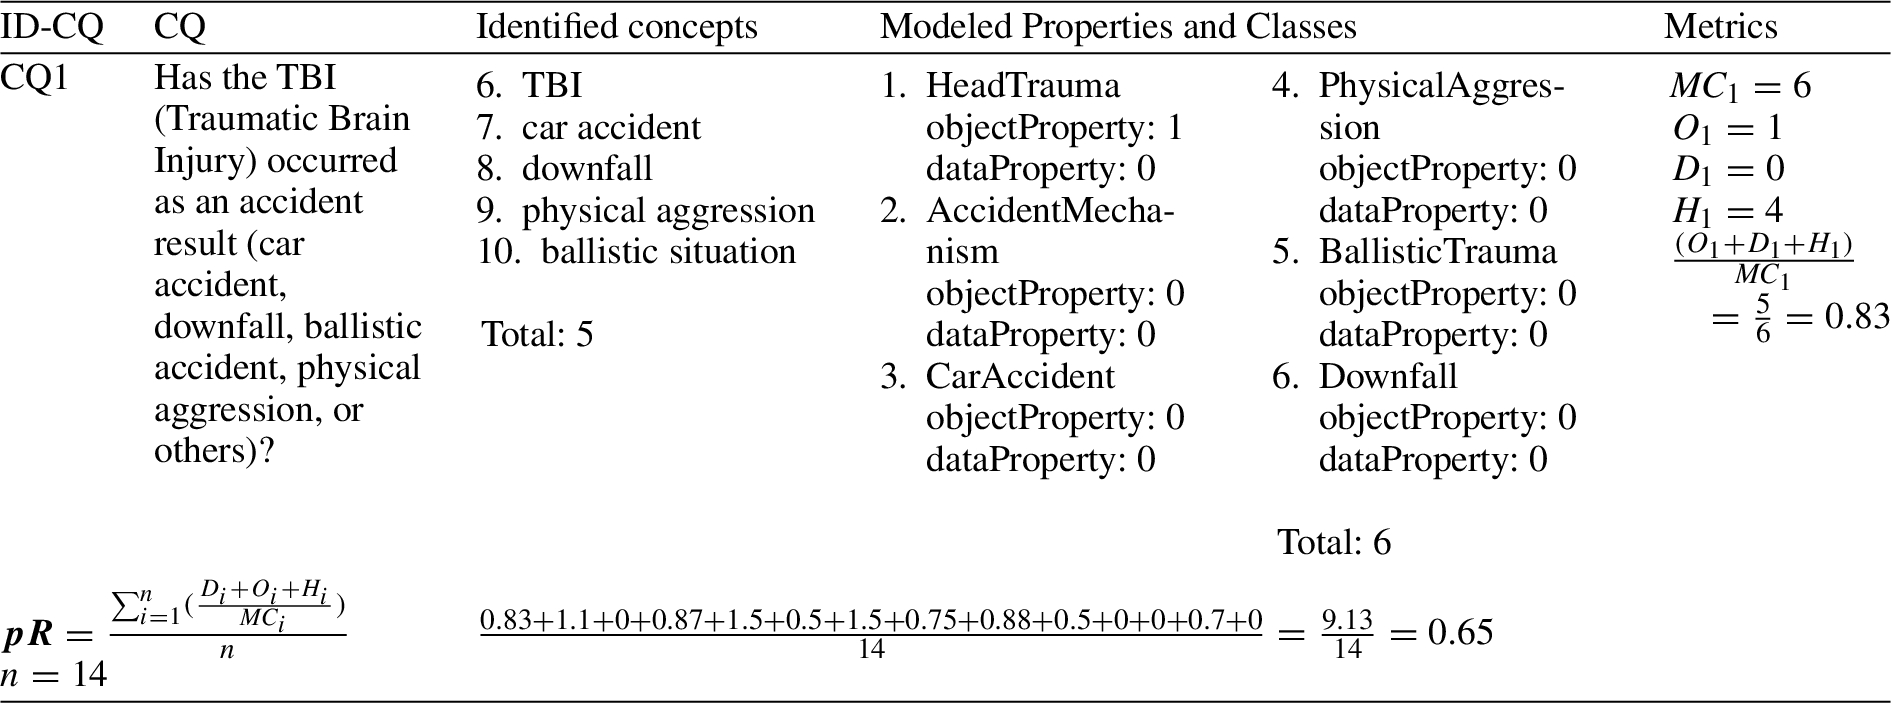 (Excerpt) previous model expressiveness calculation, where CQ1 has a low ratio